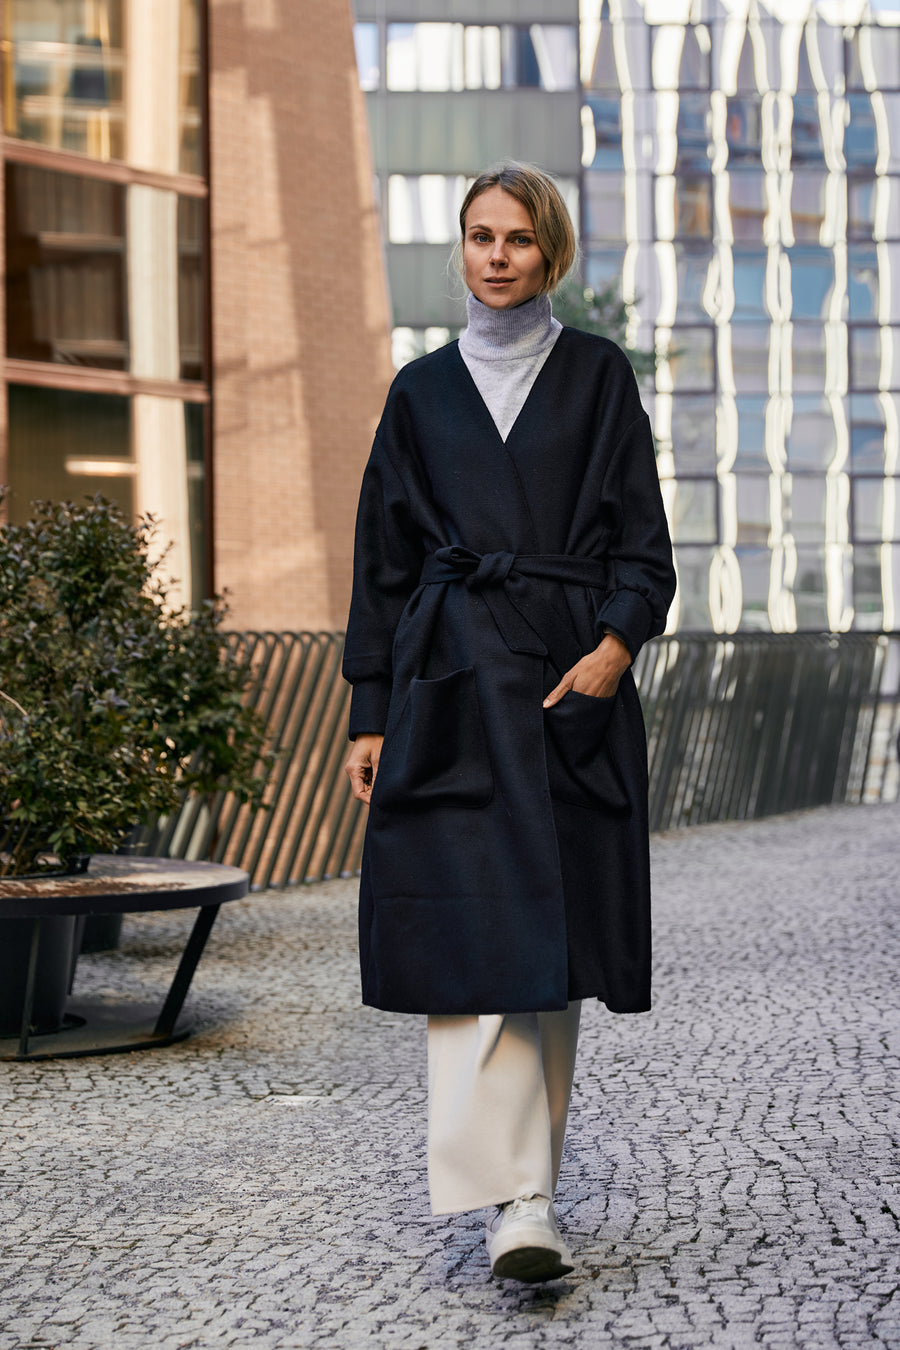 bathrobe style womens wool coat is made from sustainable Saimaa Wool's luxurious tweed fabric.  Tweeds are an ecol friendlyfabric